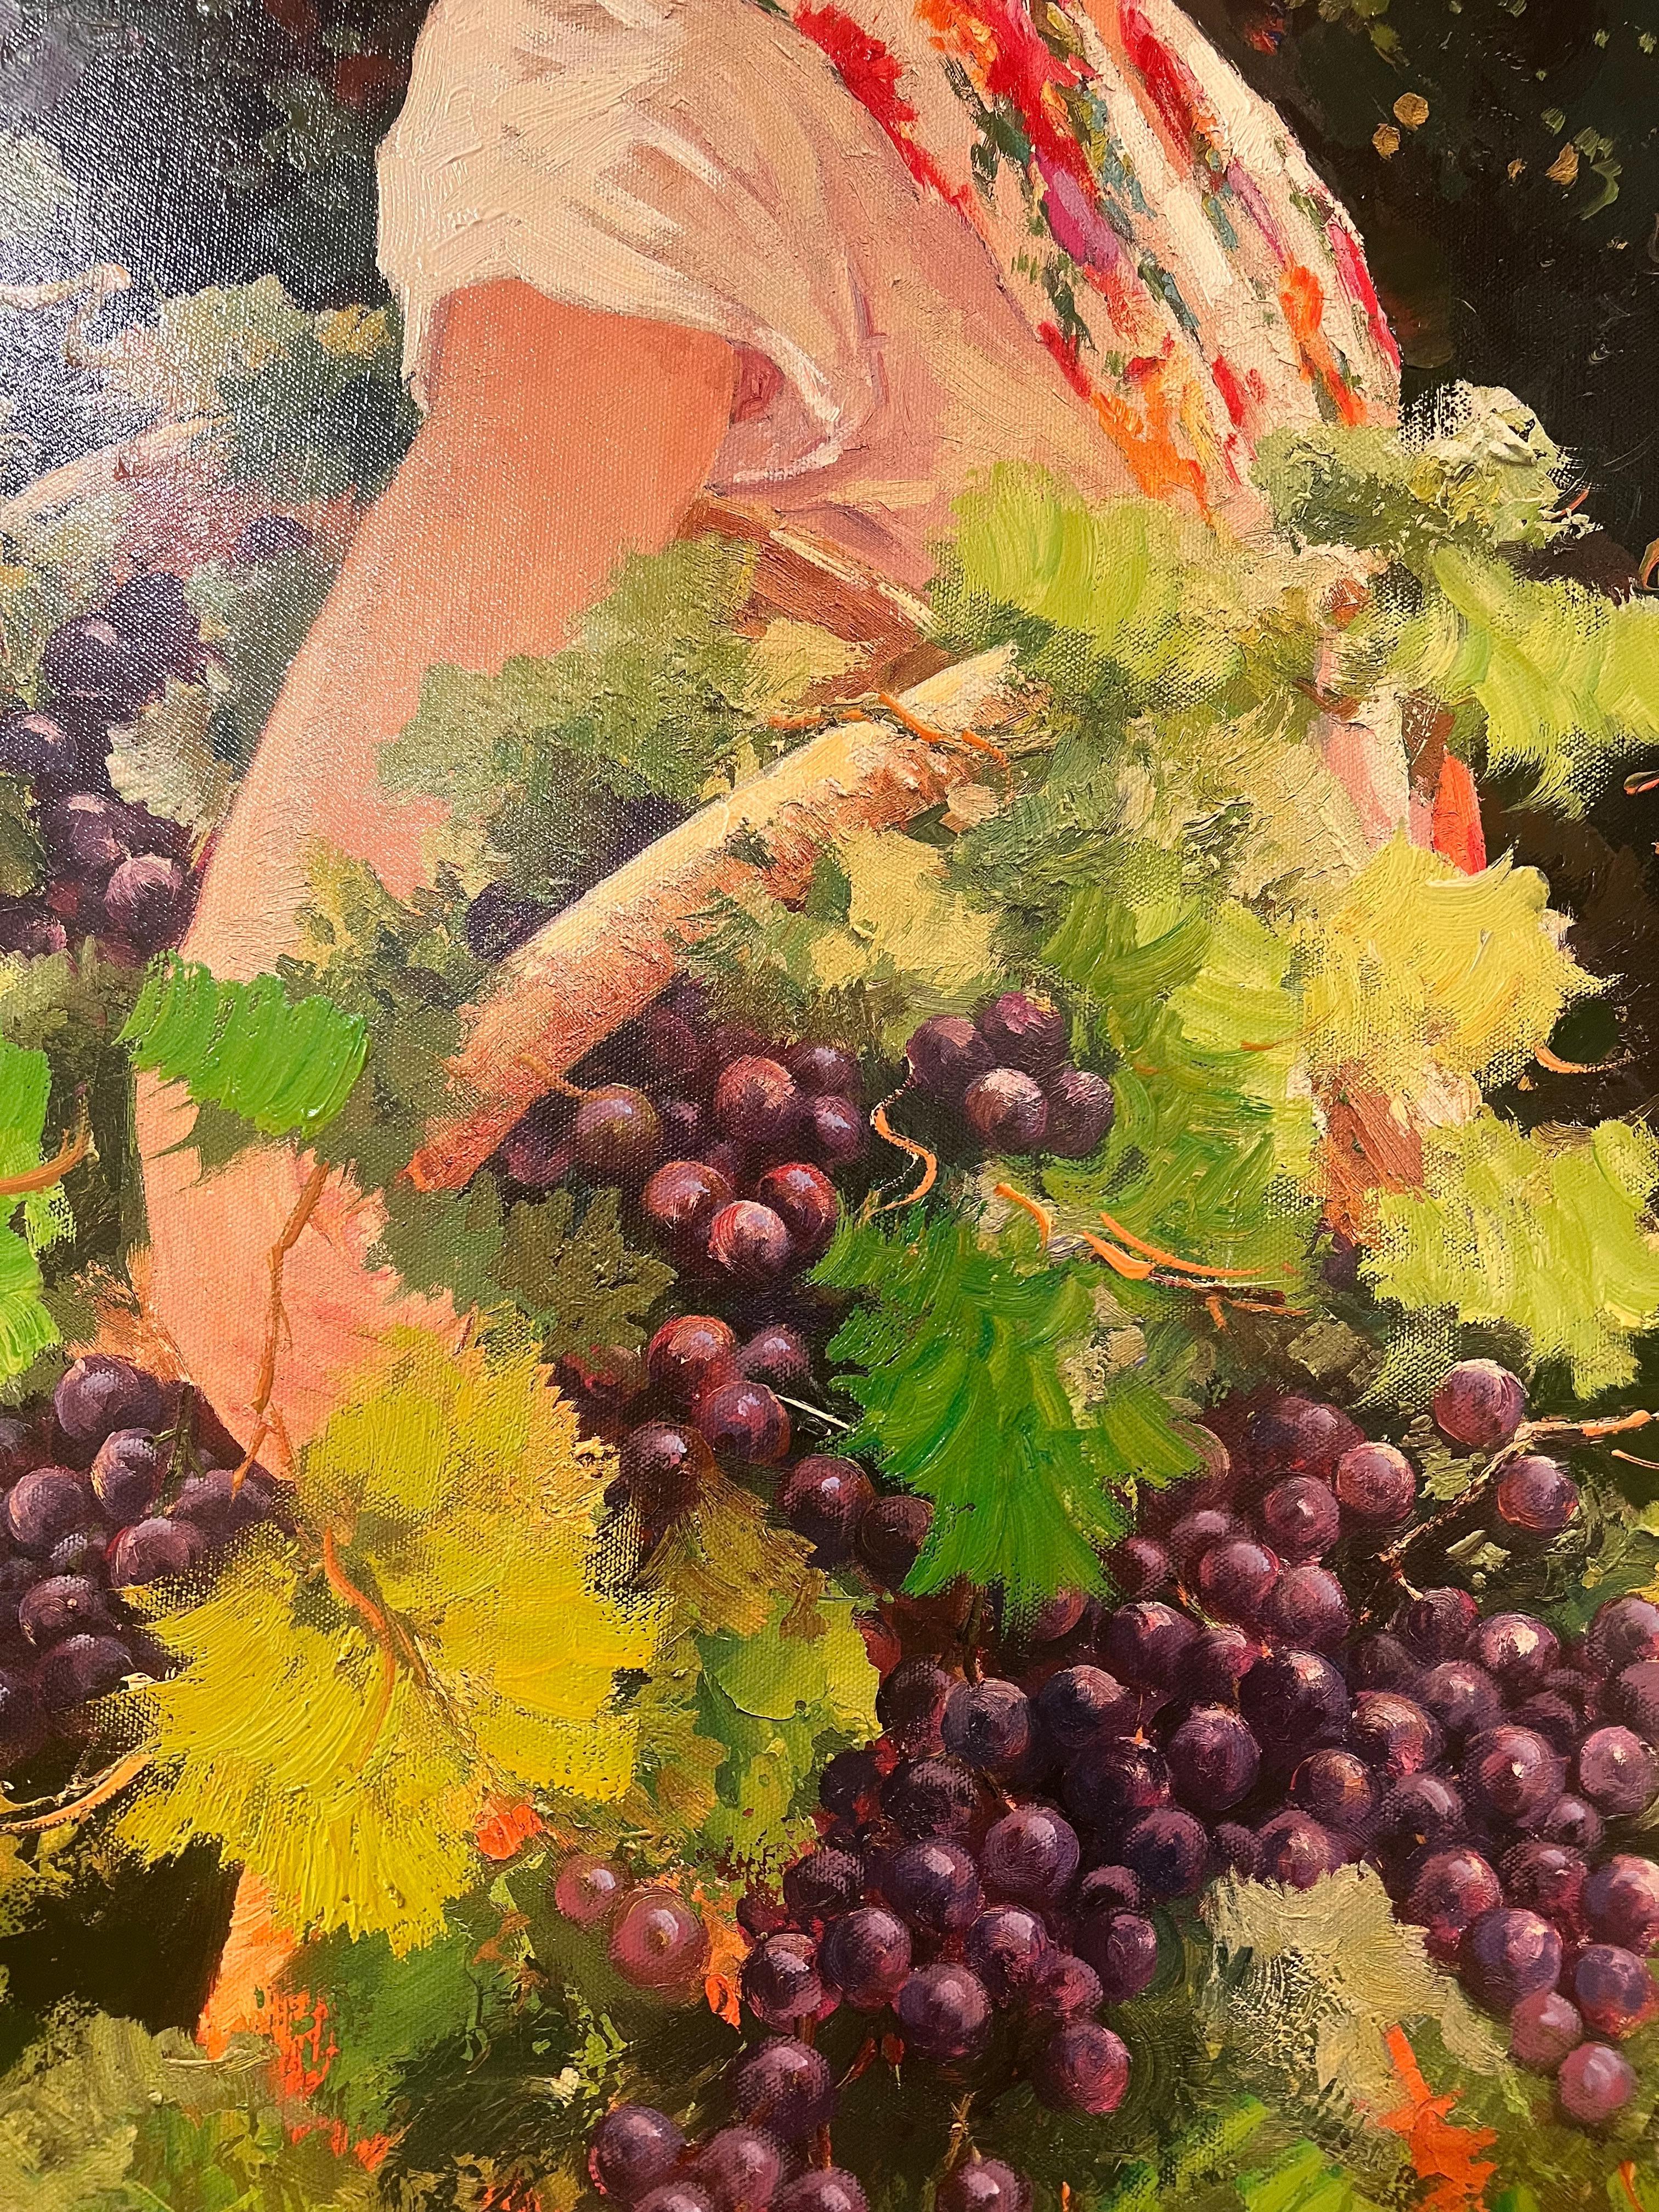 Vendimiadora (Grape Harvester) - Painting by Roman Frances